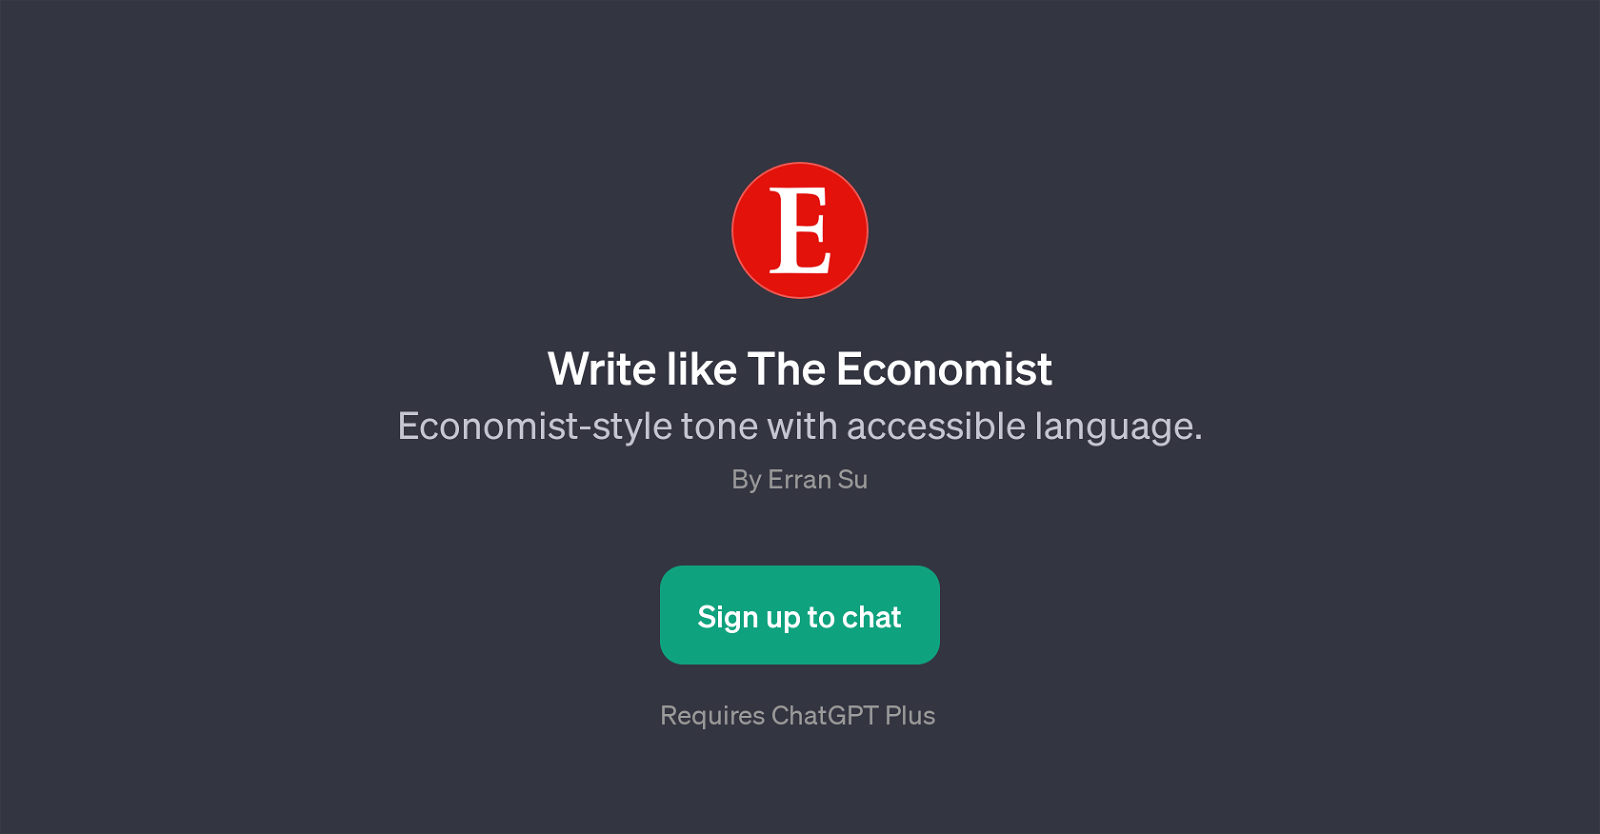 Write like The Economist website